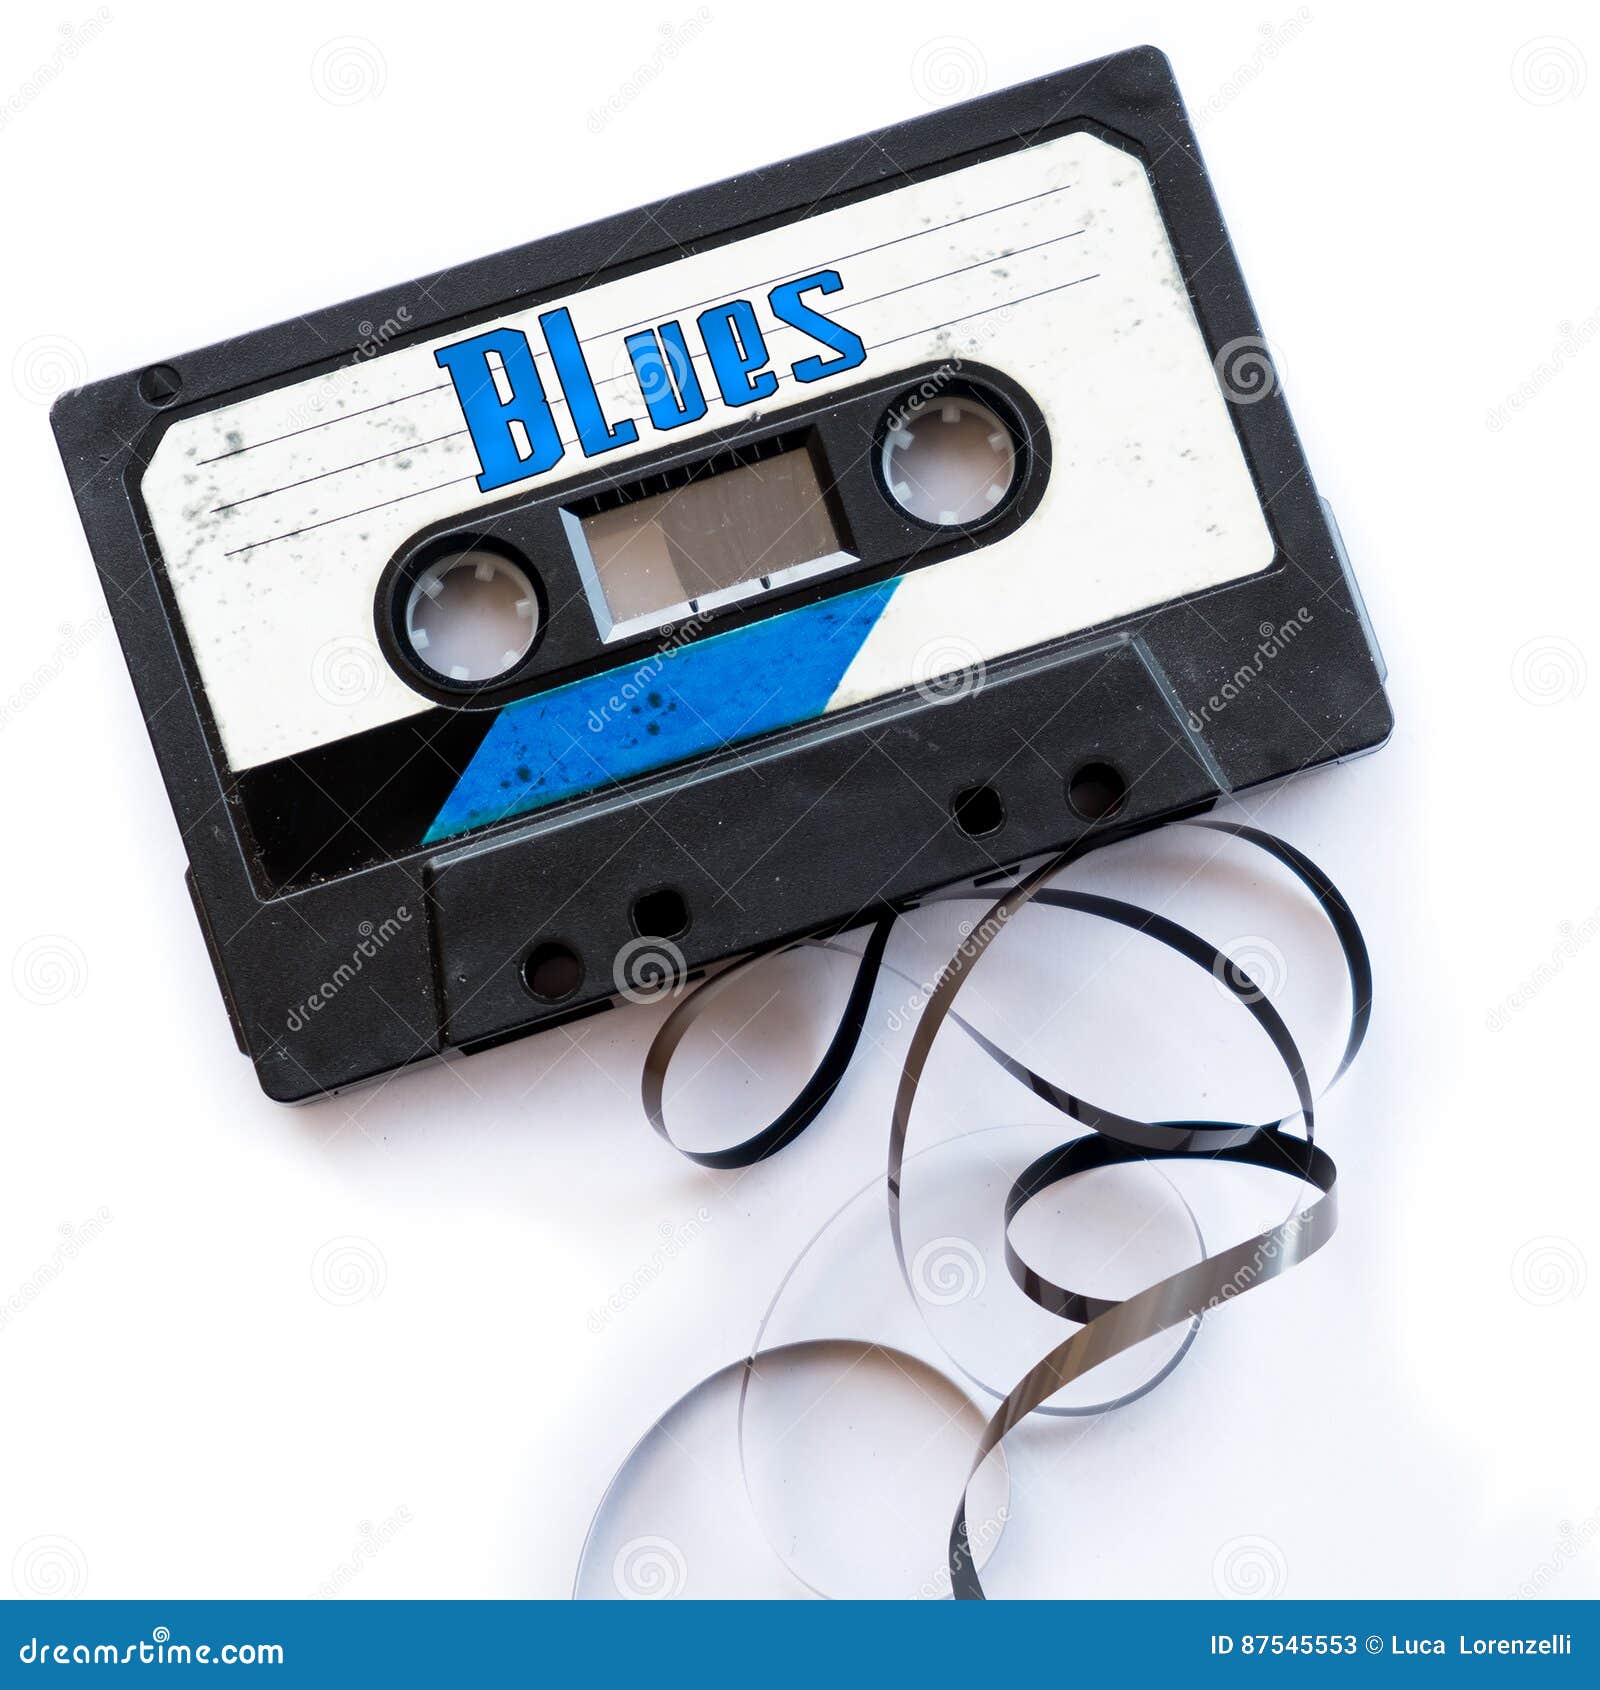 blues musical genres audio tape label